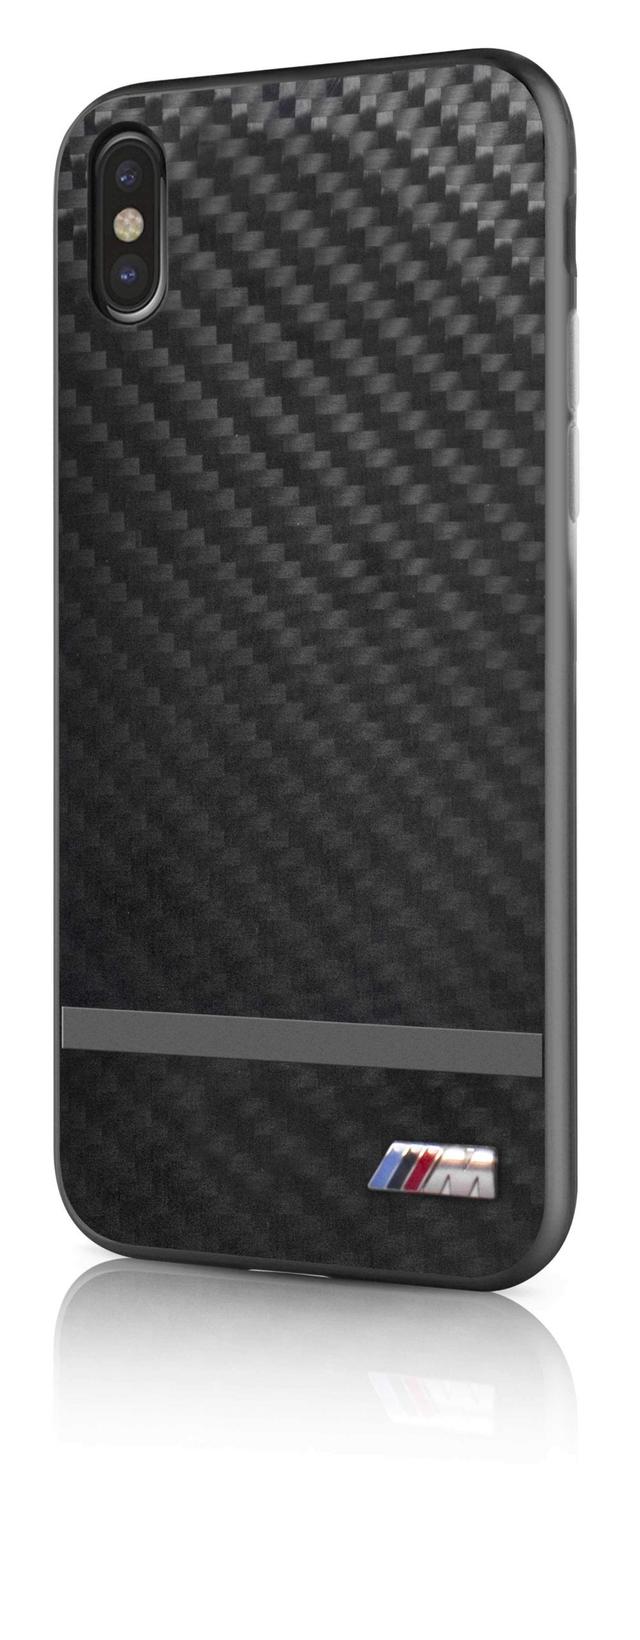 bmw real carbon fiber tpu hybrid case for iphone x gun metal - SW1hZ2U6NjQ5ODE=